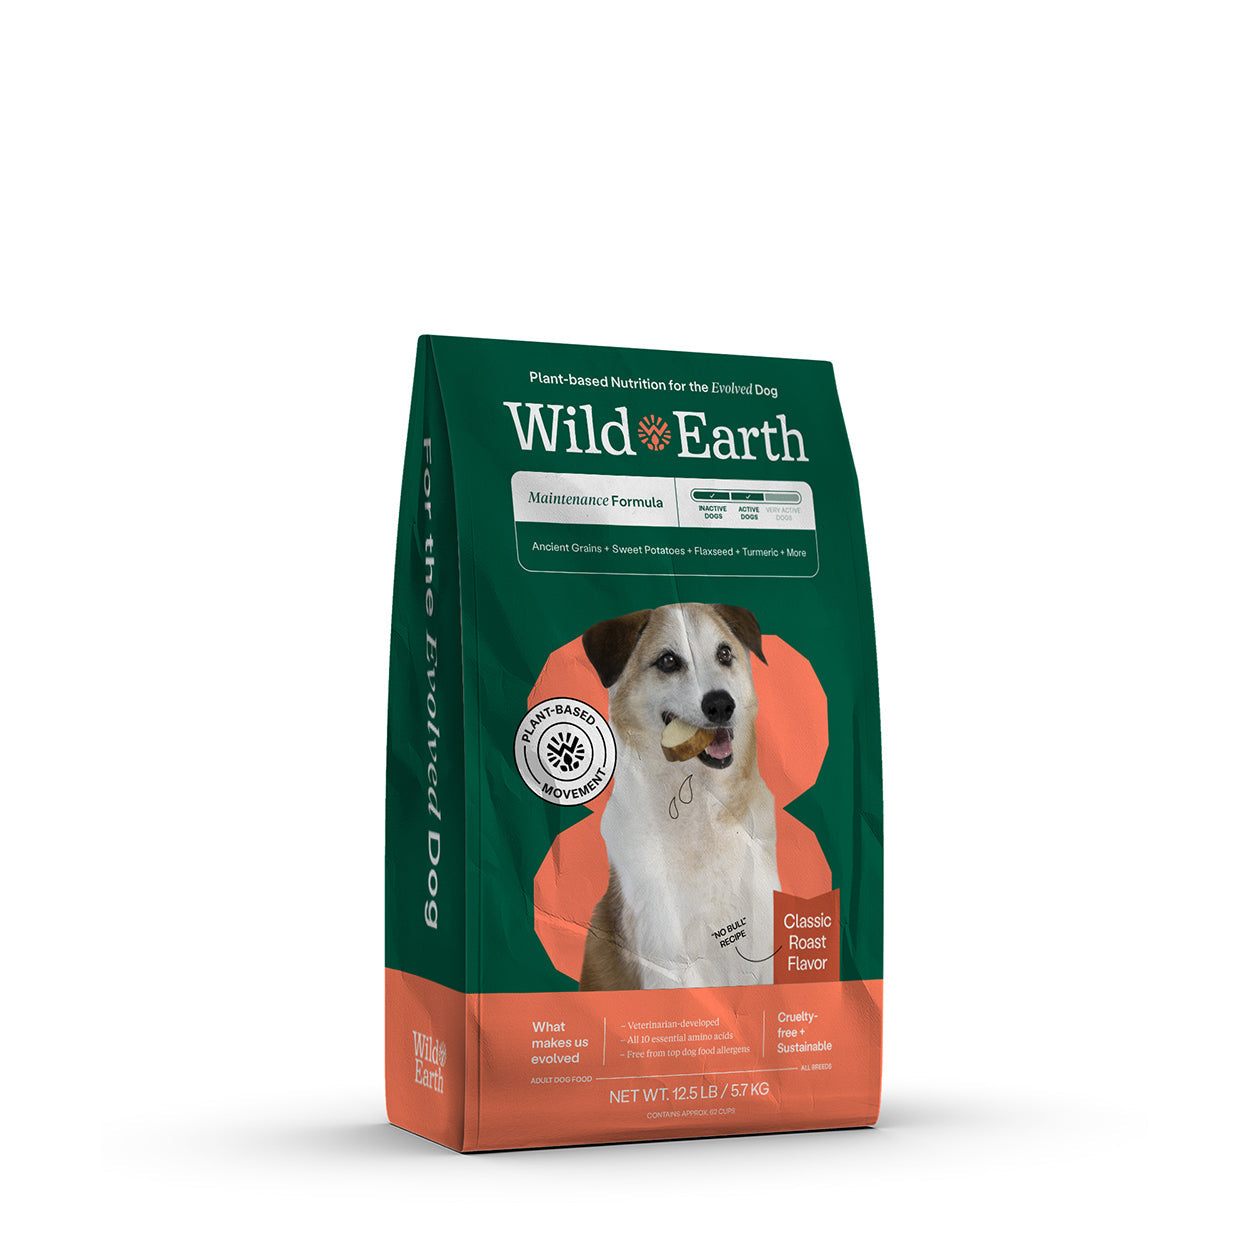 Maintenance Formula Dog Food by Wild Earth